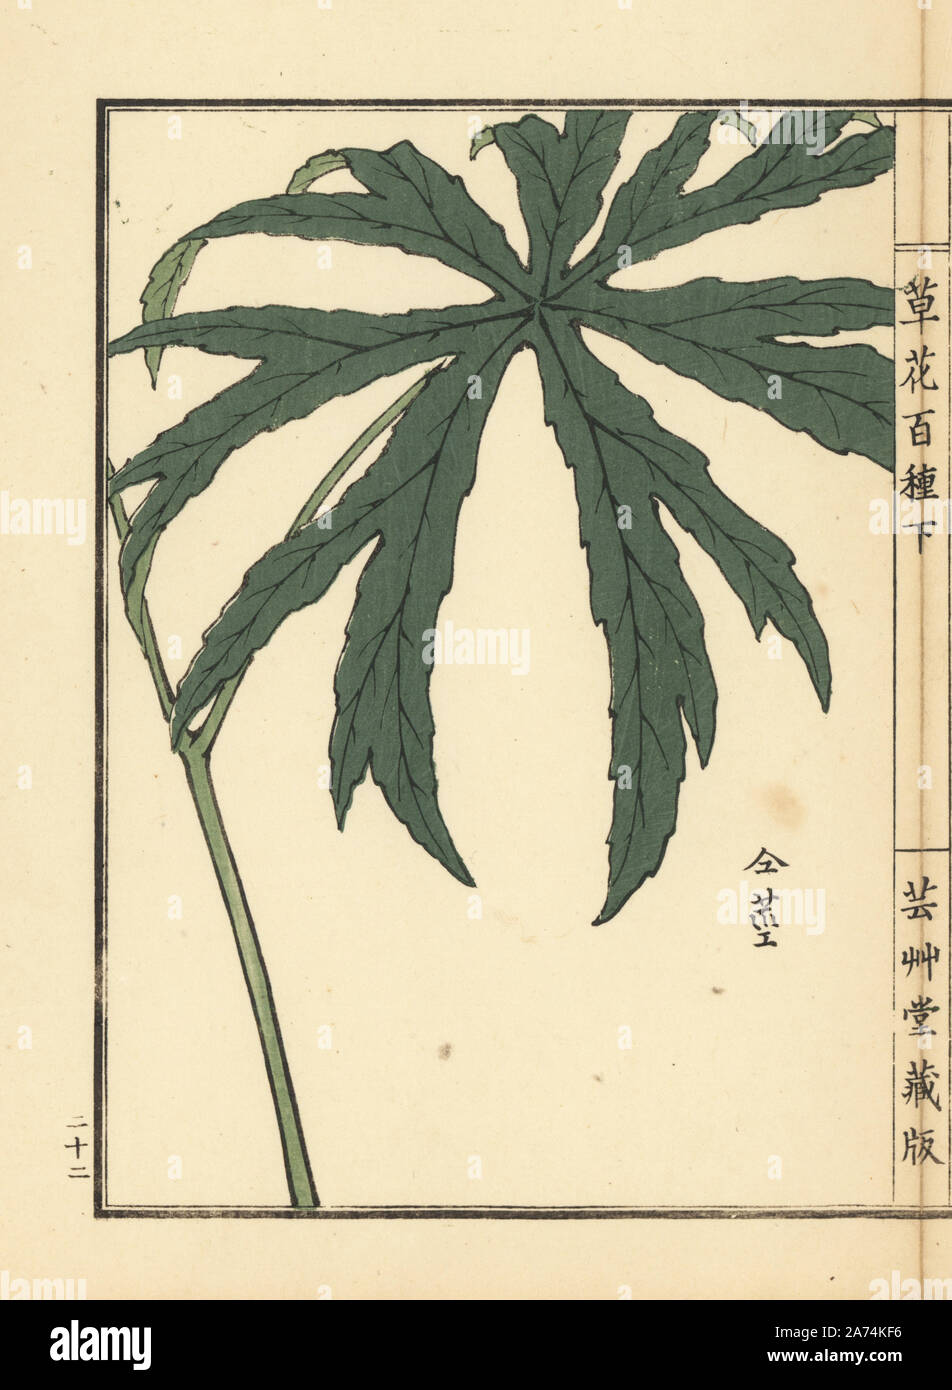 Yaburegasa or shredded umbrella plant, Syneilesis palmata. Handcoloured woodblock print by Kono Bairei from Kusa Bana Hyakushu (One Hundred Varieties of Flowers), Tokyo, Yamada, 1901. Stock Photo